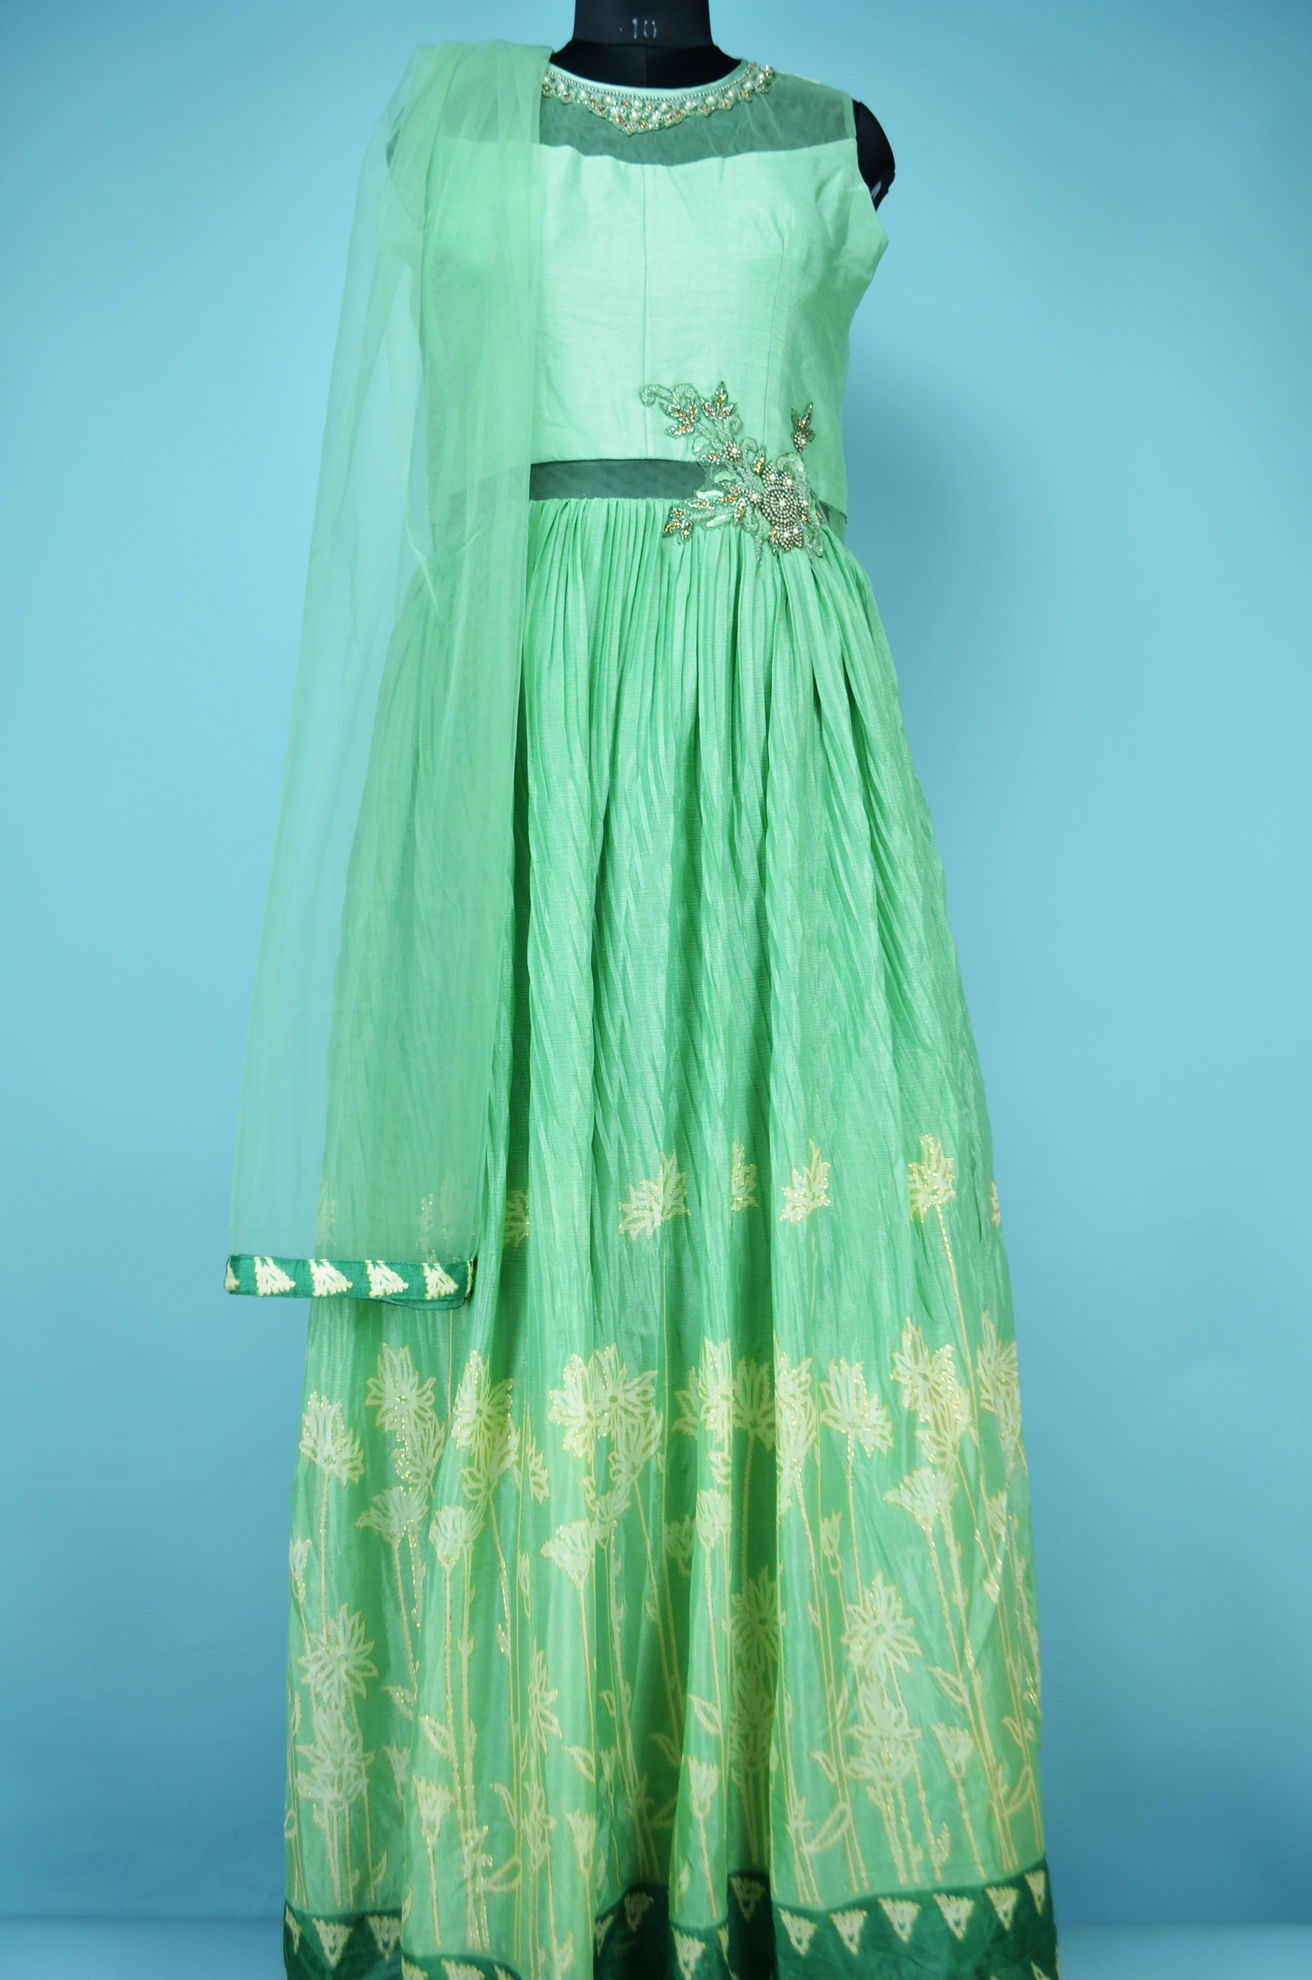 Buy Designer Party Wear Crepe Green Gown LSTV114969